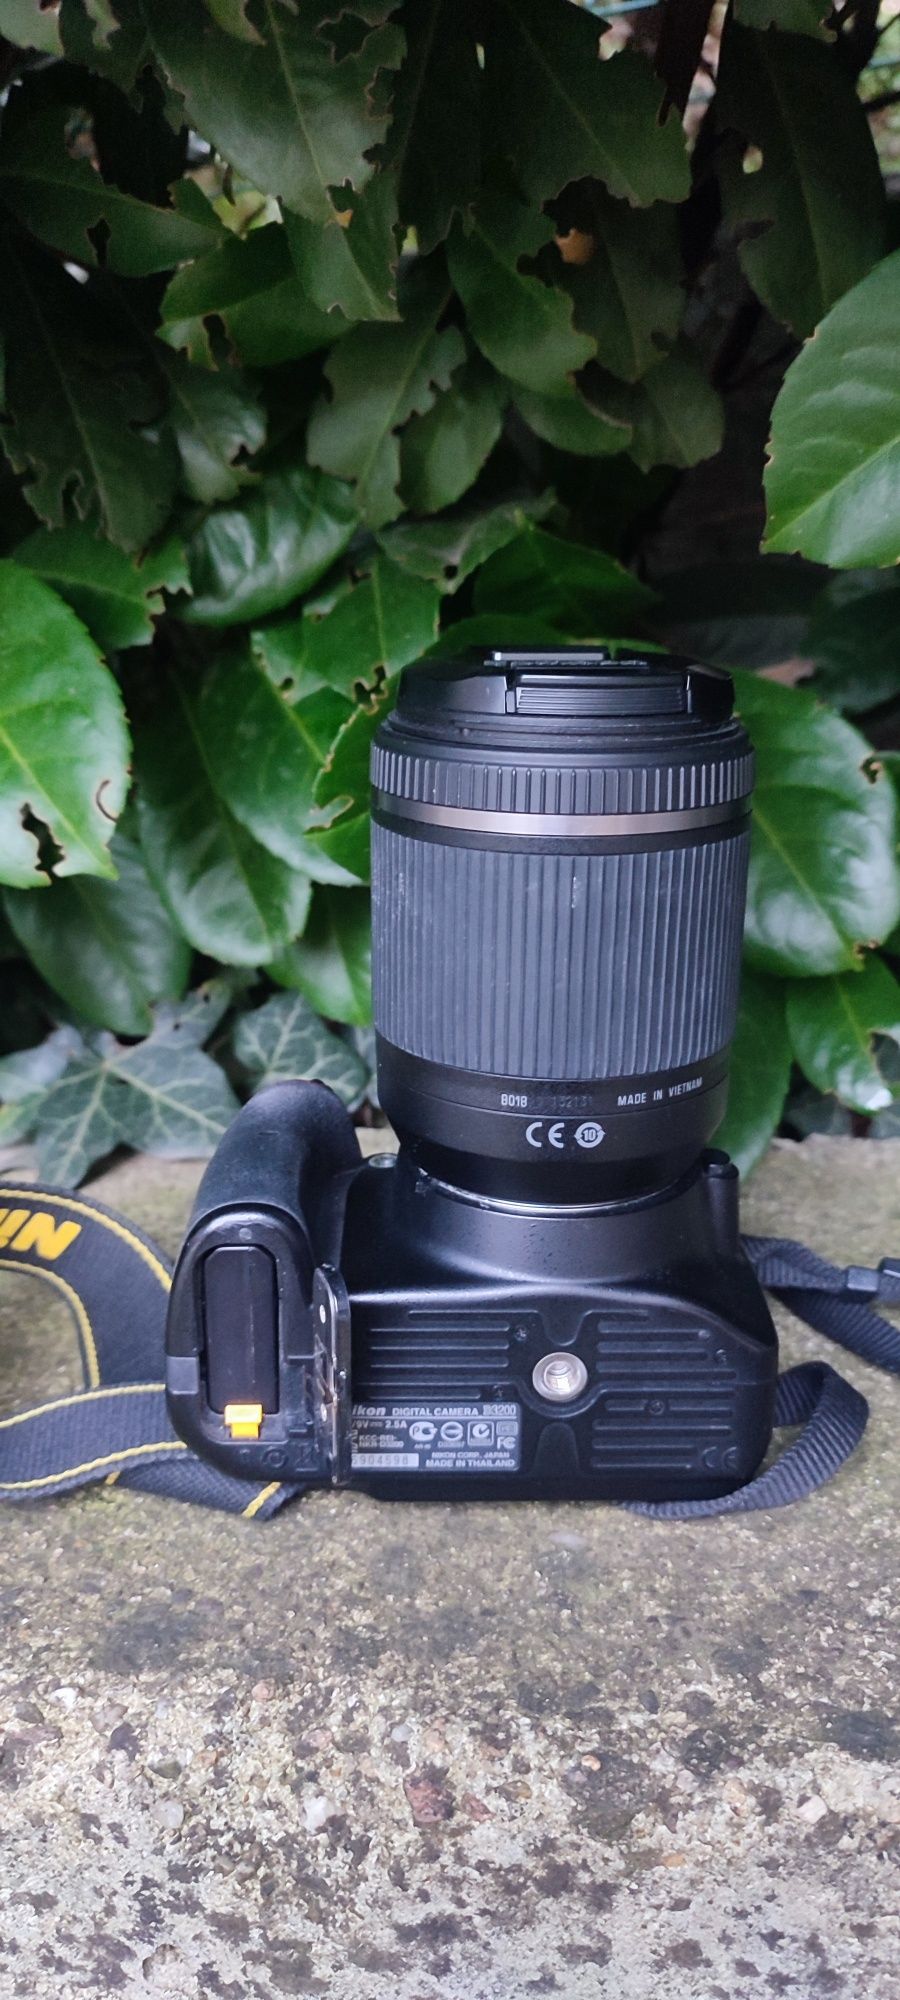 Nikon D3200 i Tamron 18-200 F/3.5-6.3 DiII